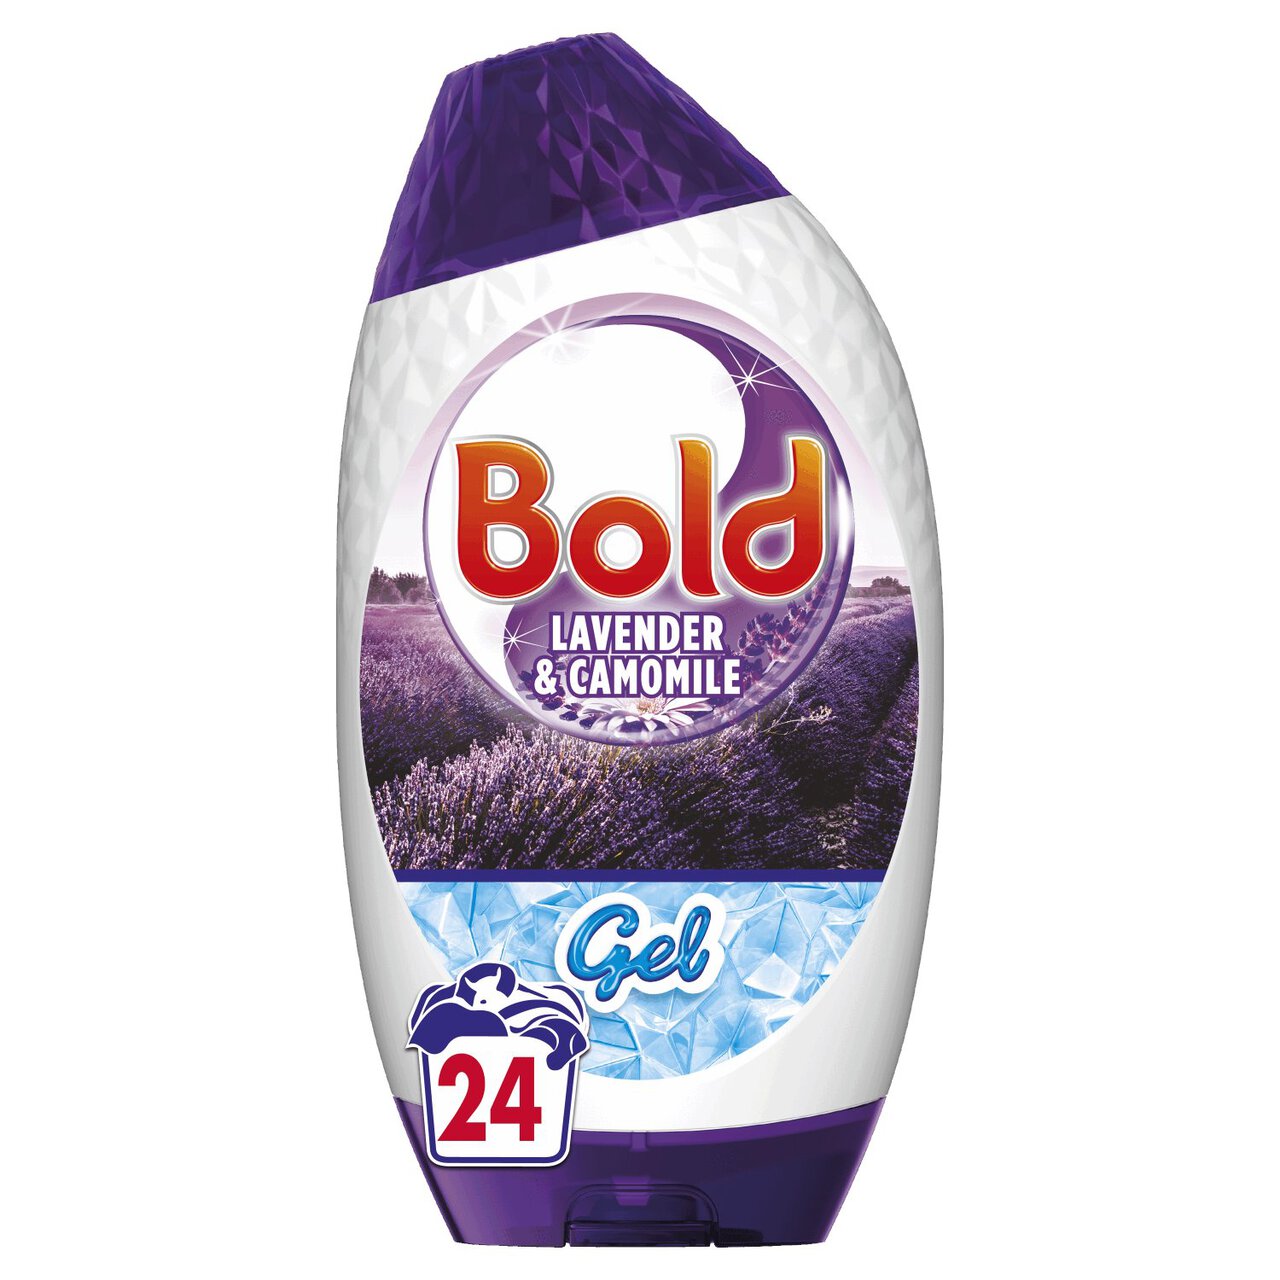 Bold 2in1 Washing Liquid Gel Lavender & Camomile 24 Washes 840ml